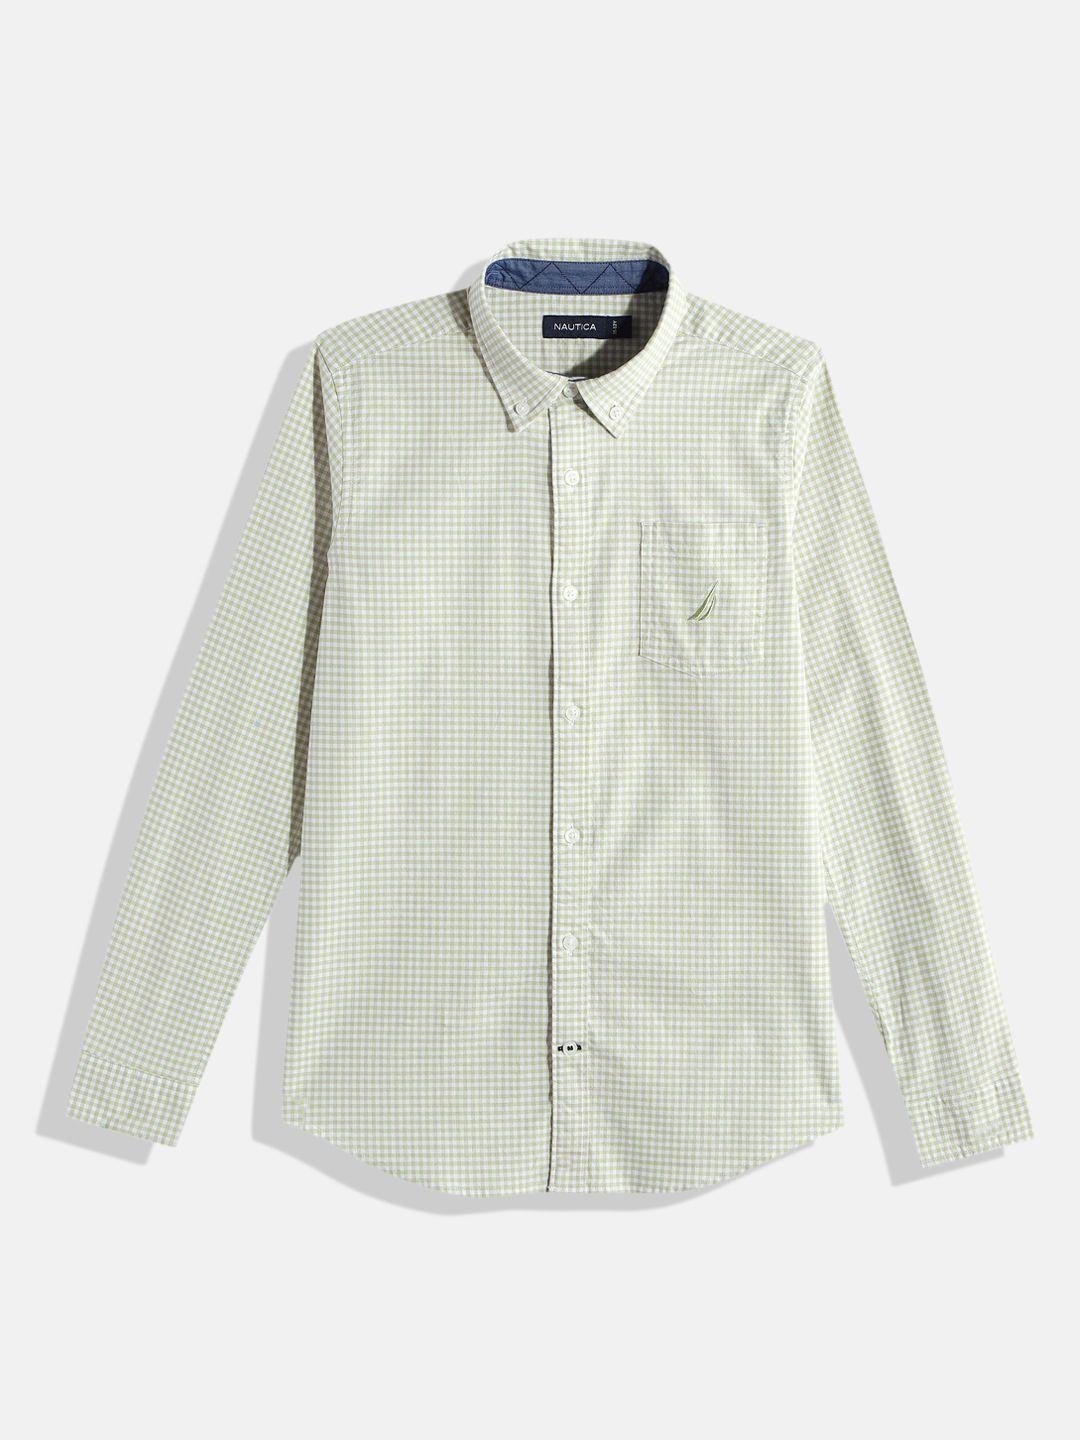 nautica boys regular fit gingham checks opaque casual shirt with chest pocket